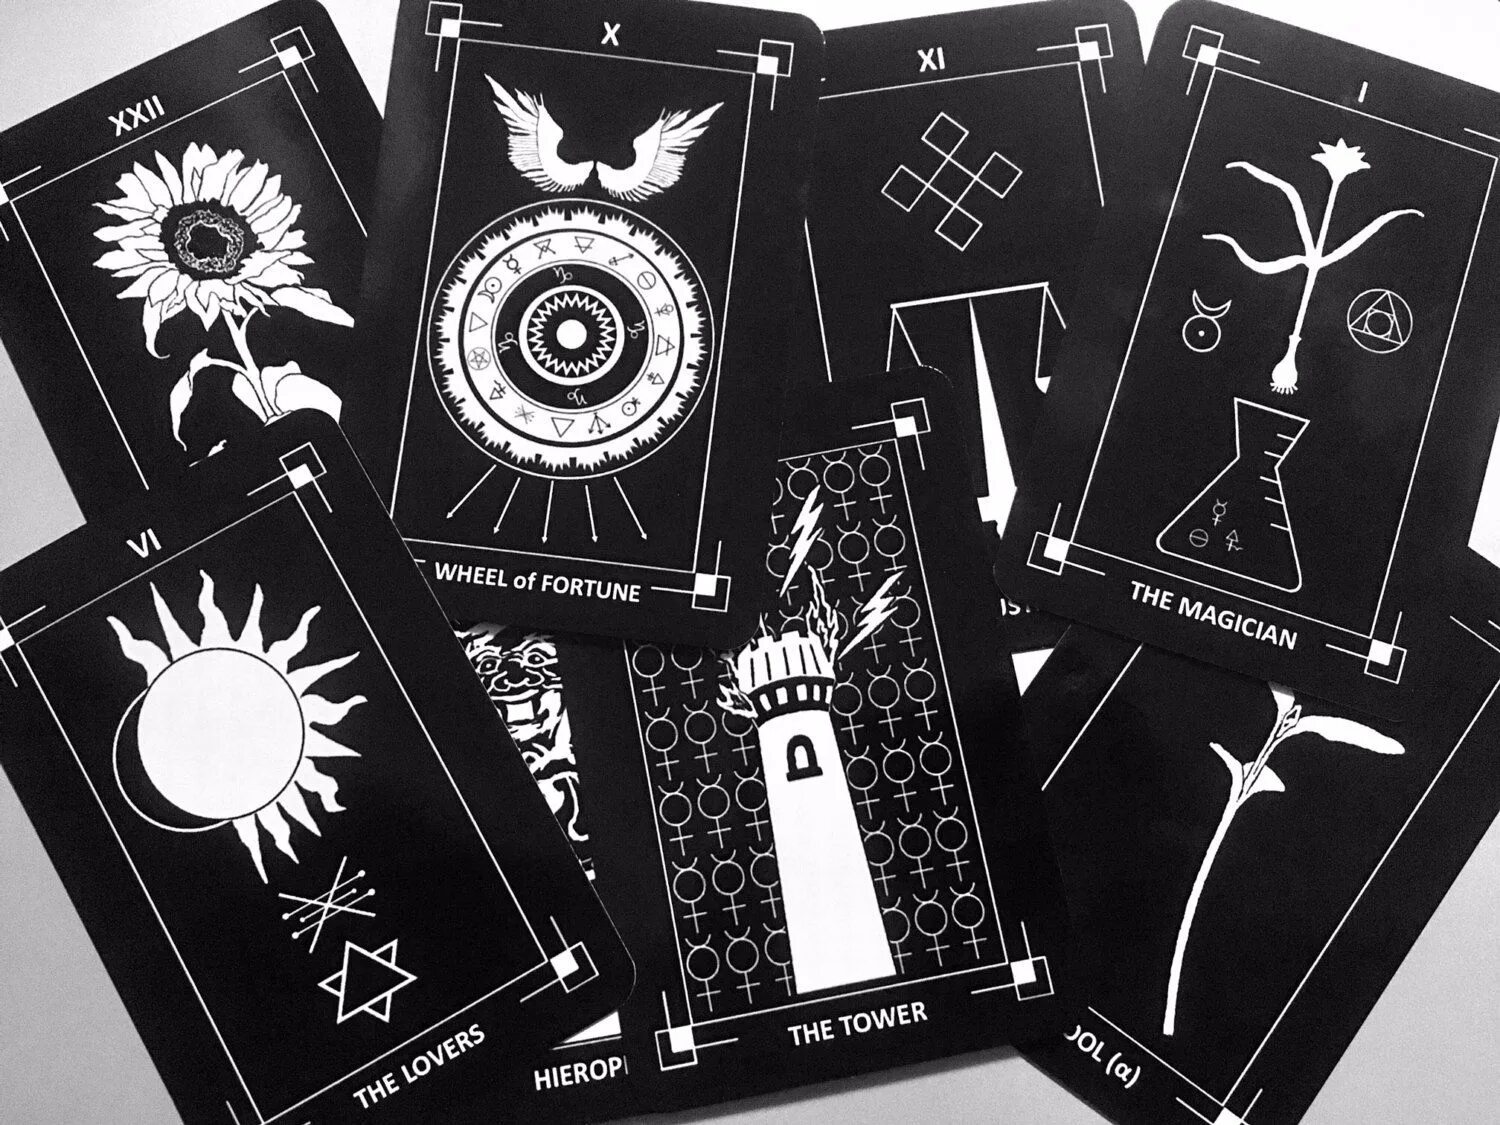 Колода чёрное Таро Black Tarot. Tarot Cards черная колода Таро. Блэк Вайт колода Таро. Черно Золотая колода Таро.